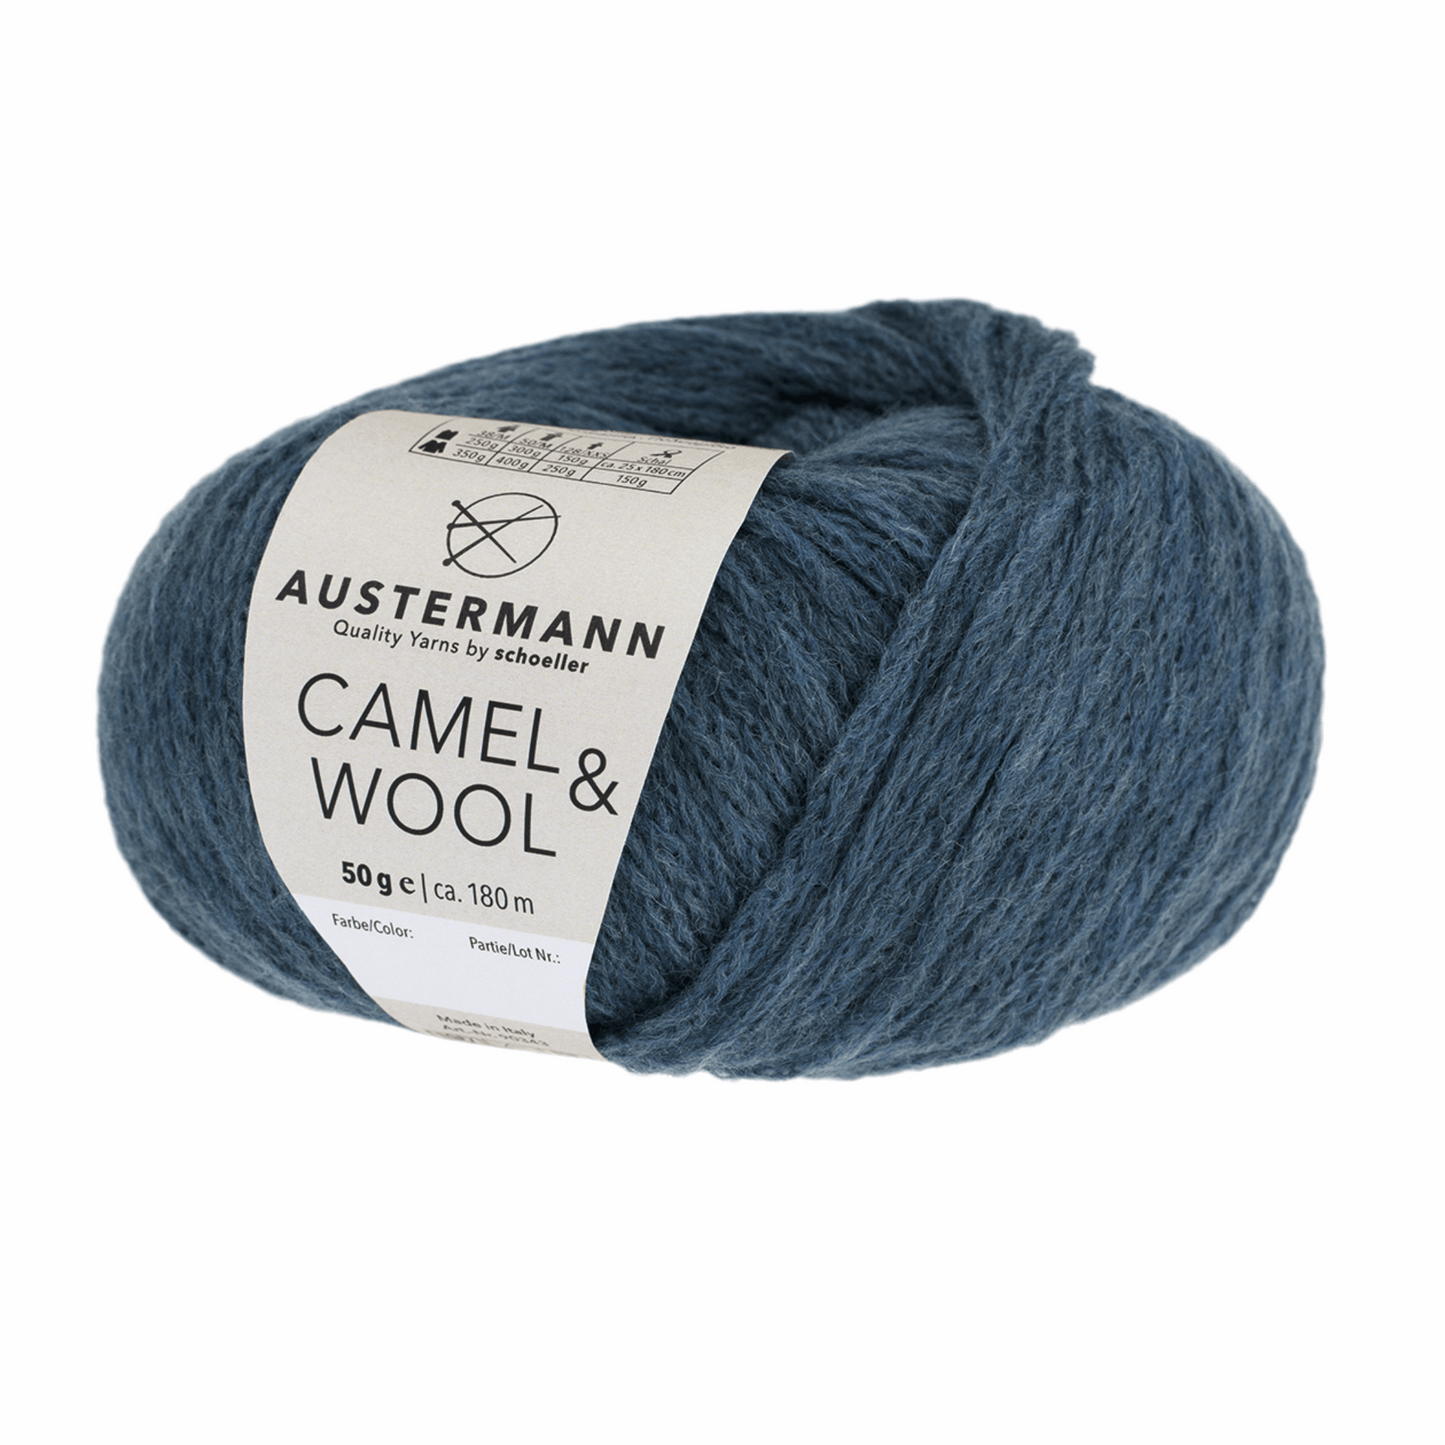 Cameliert& Wool 50g, 90343, Farbe 10, petrol